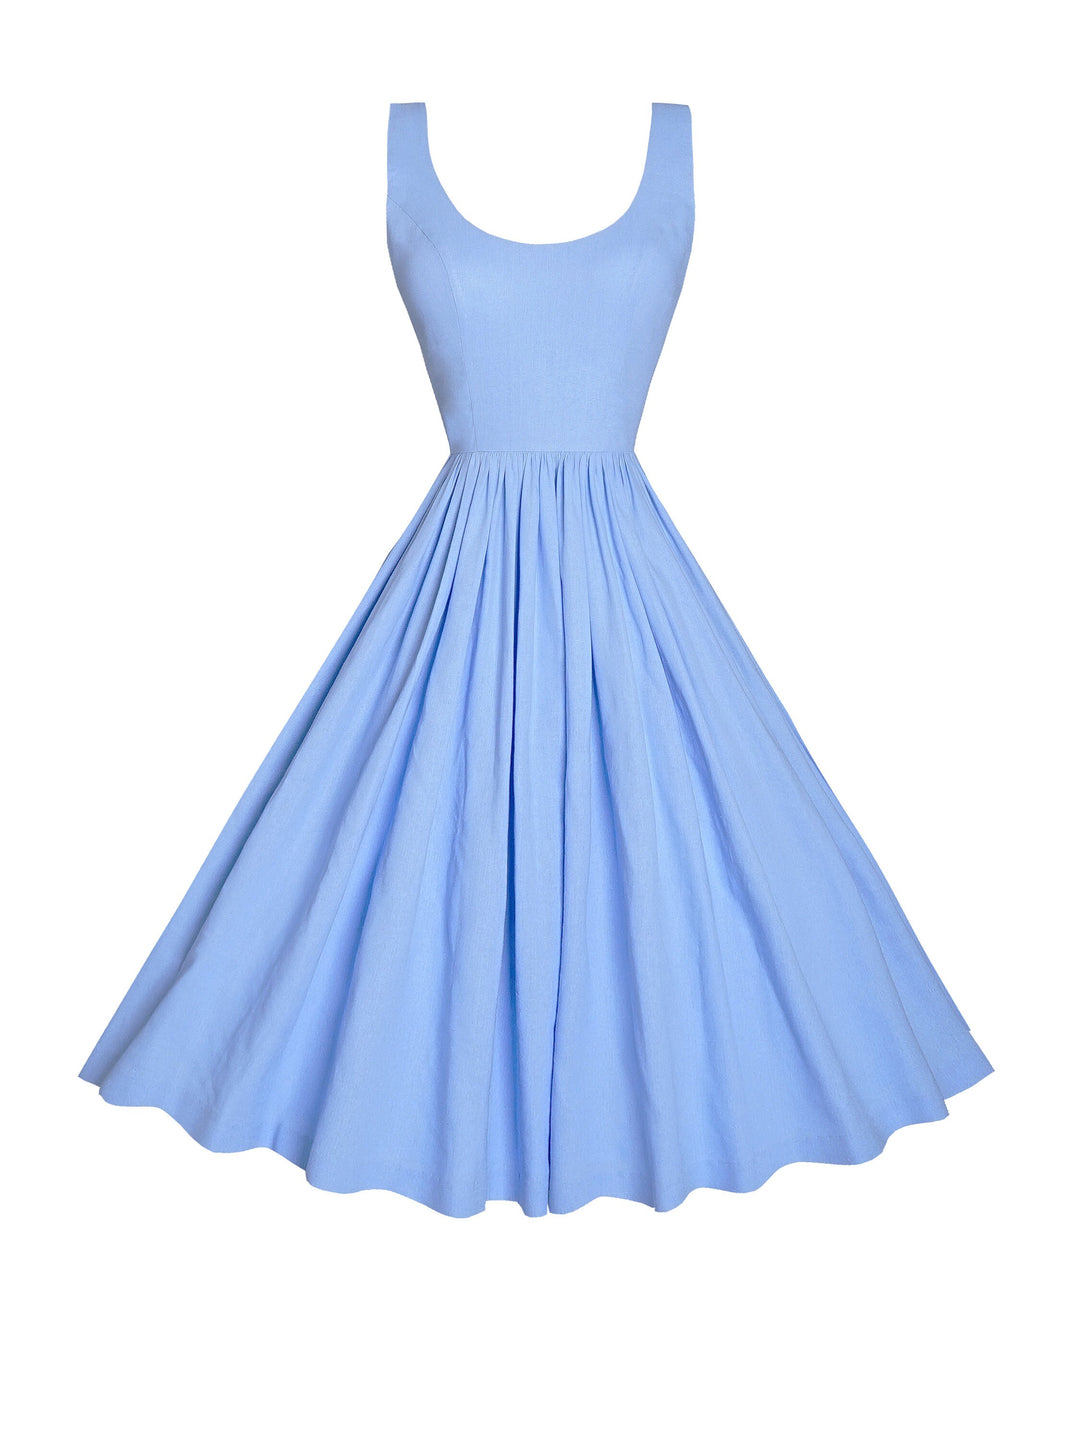 MTO - Emily Dress in Powder Blue Linen